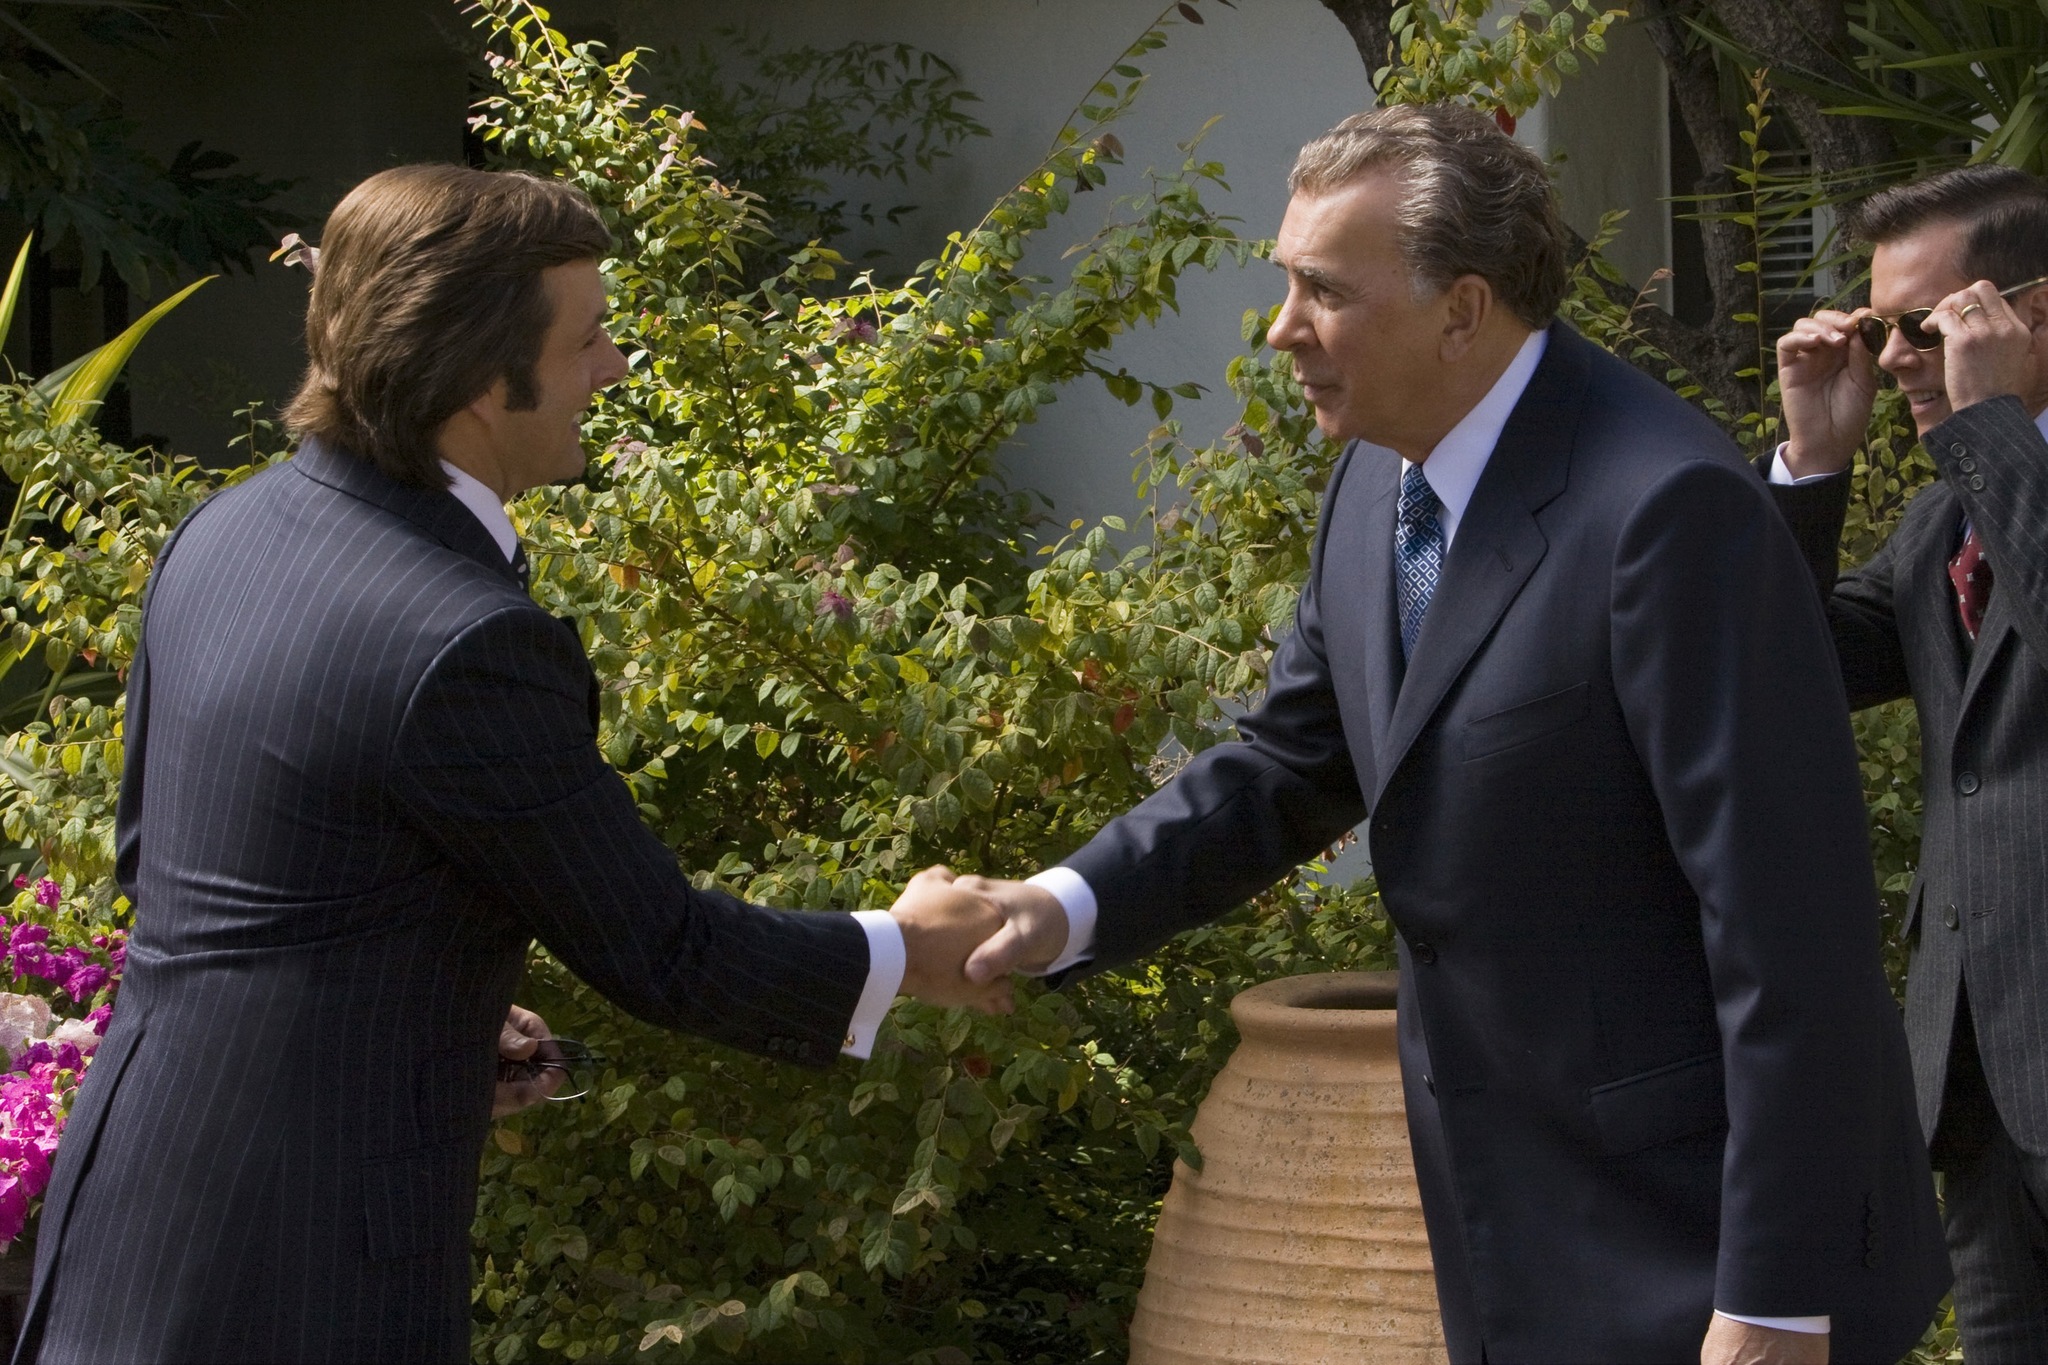 Still of Frank Langella and Michael Sheen in Frost/Nixon (2008)